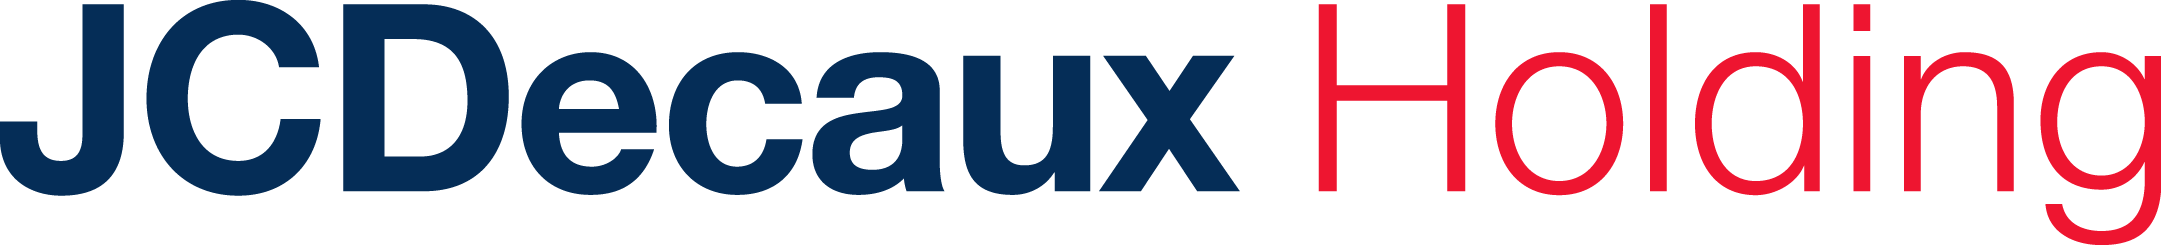 Logo Jcdecaux Holding